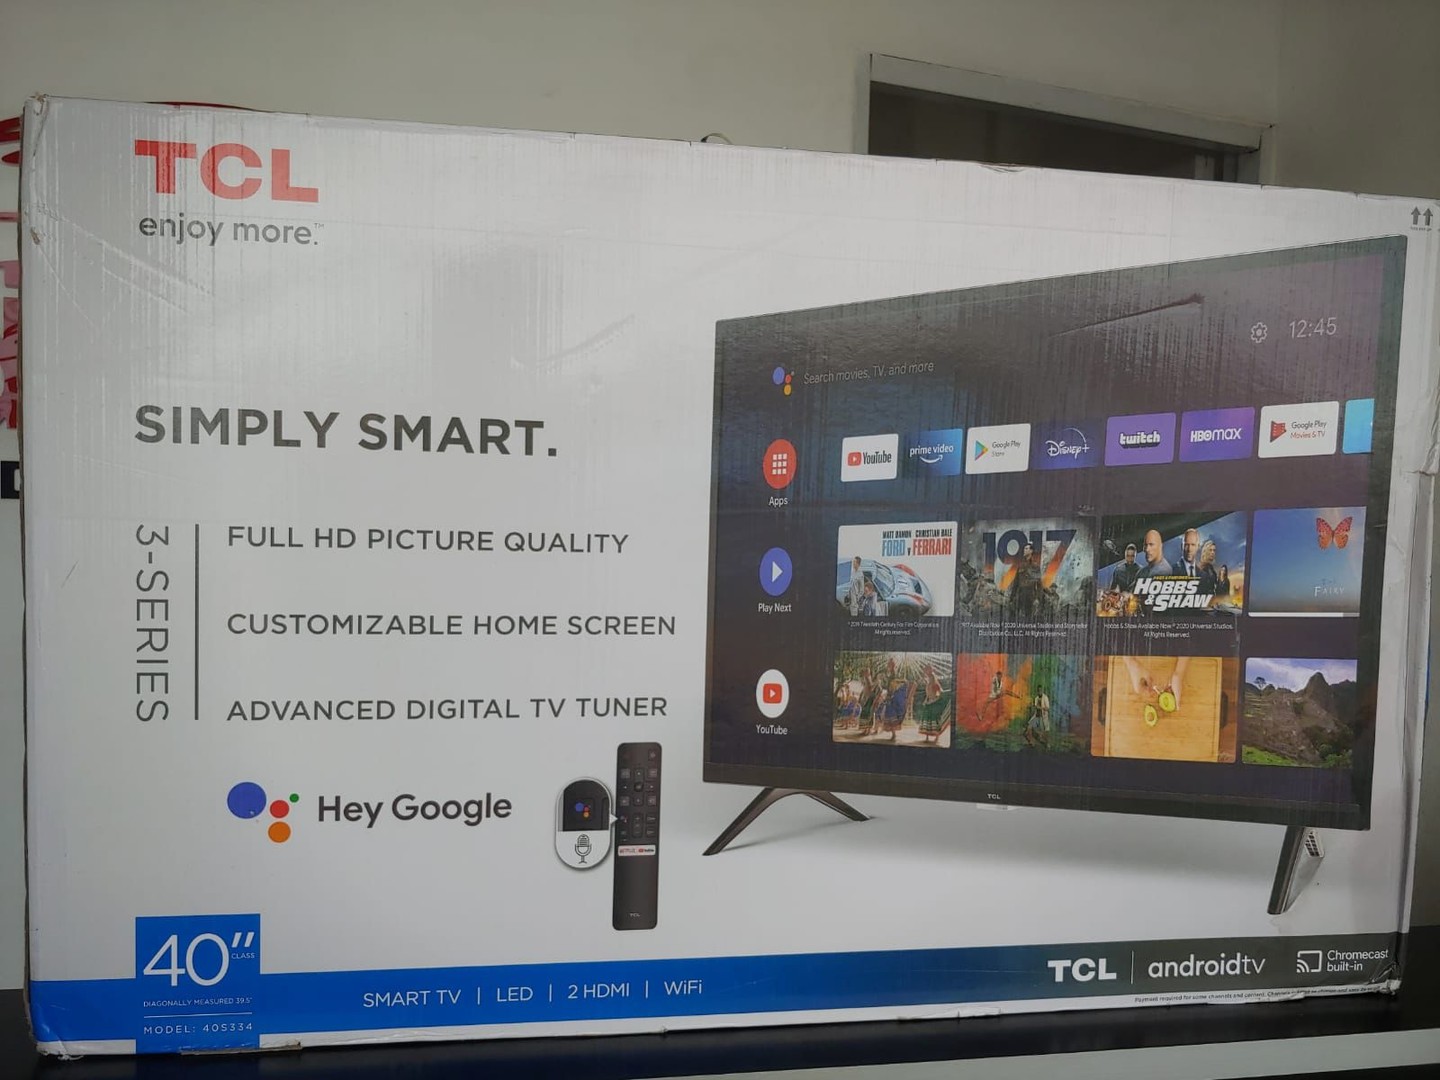 tv - TCL 40'' Inch Full HD 1080P LED Android Smart TV - Black - 40S334

Nueva sellada